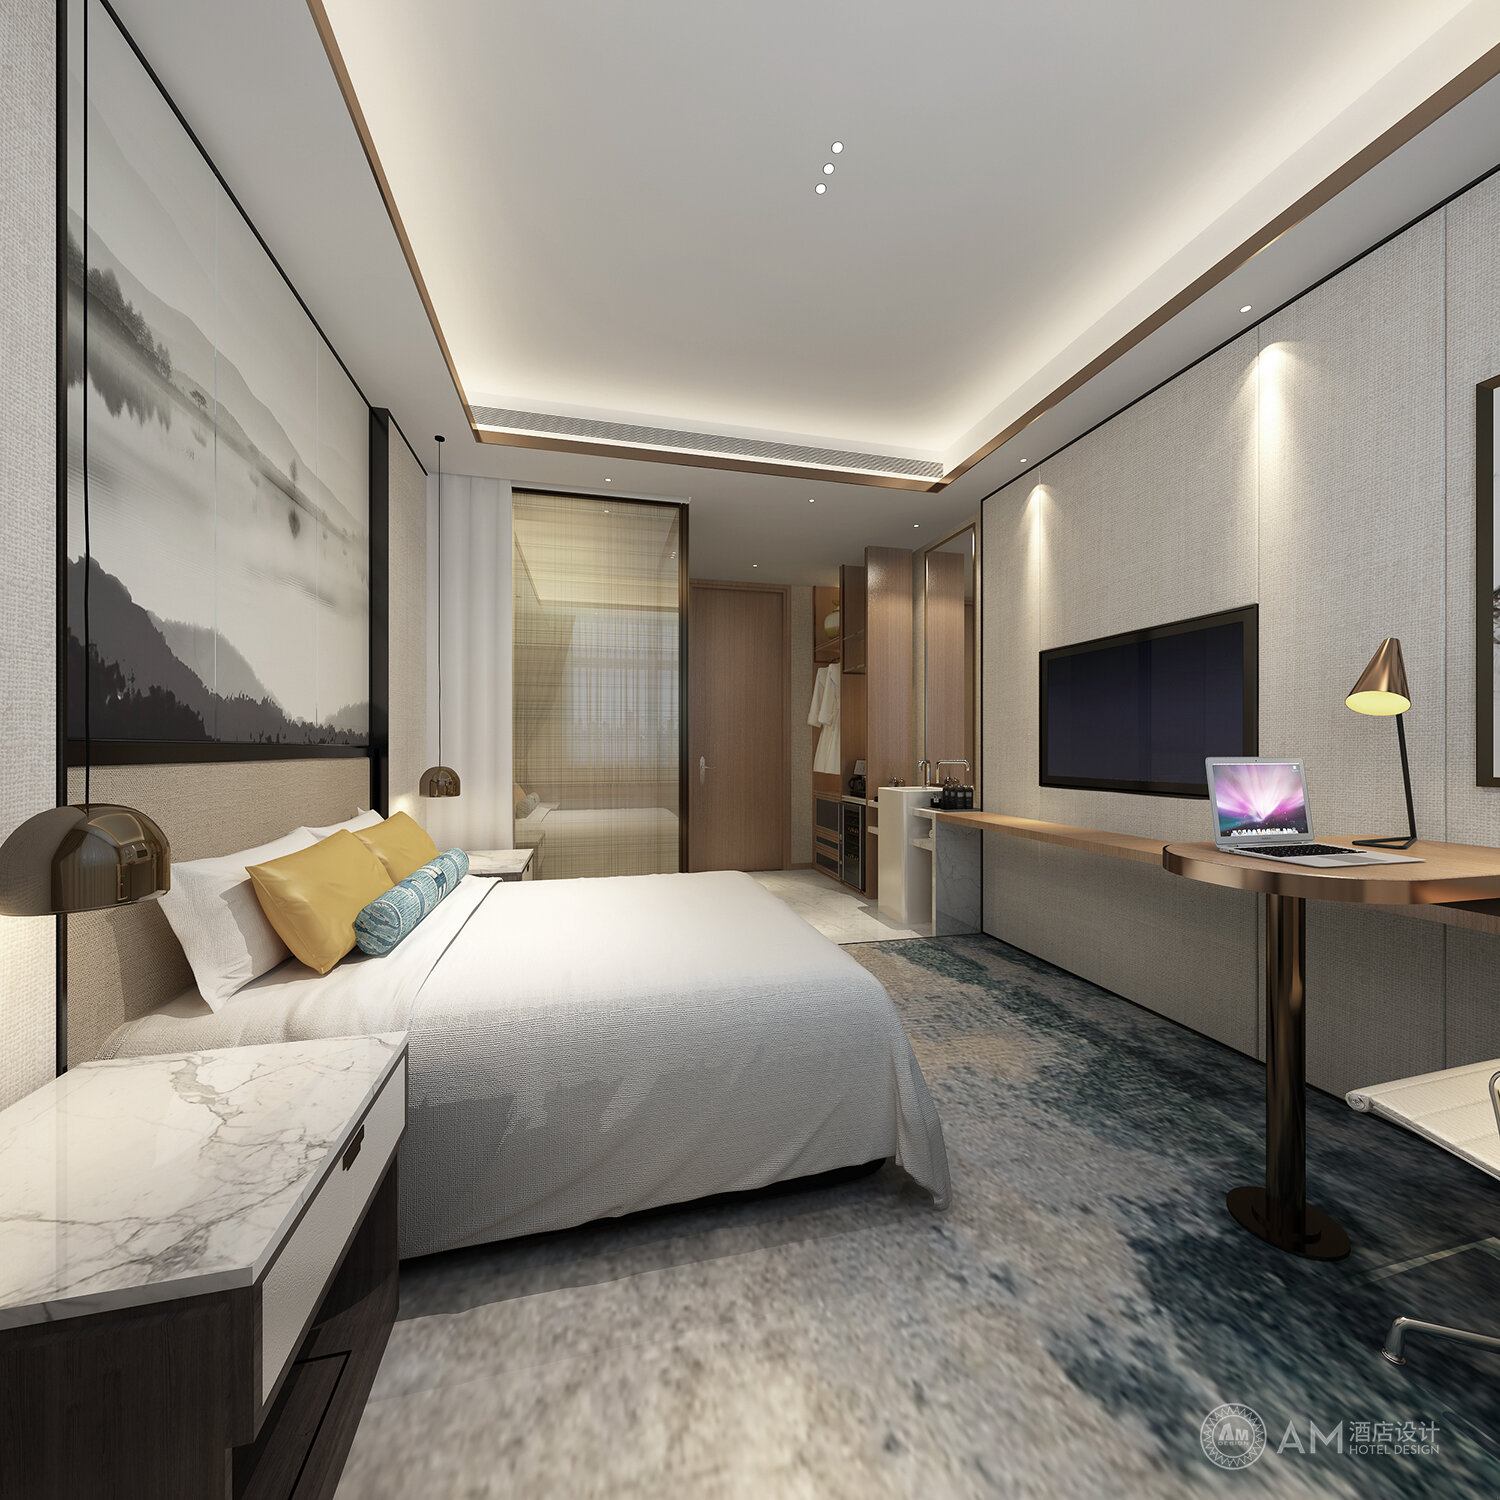 AM DESIGN | Room design of wandun hotel in Daqing